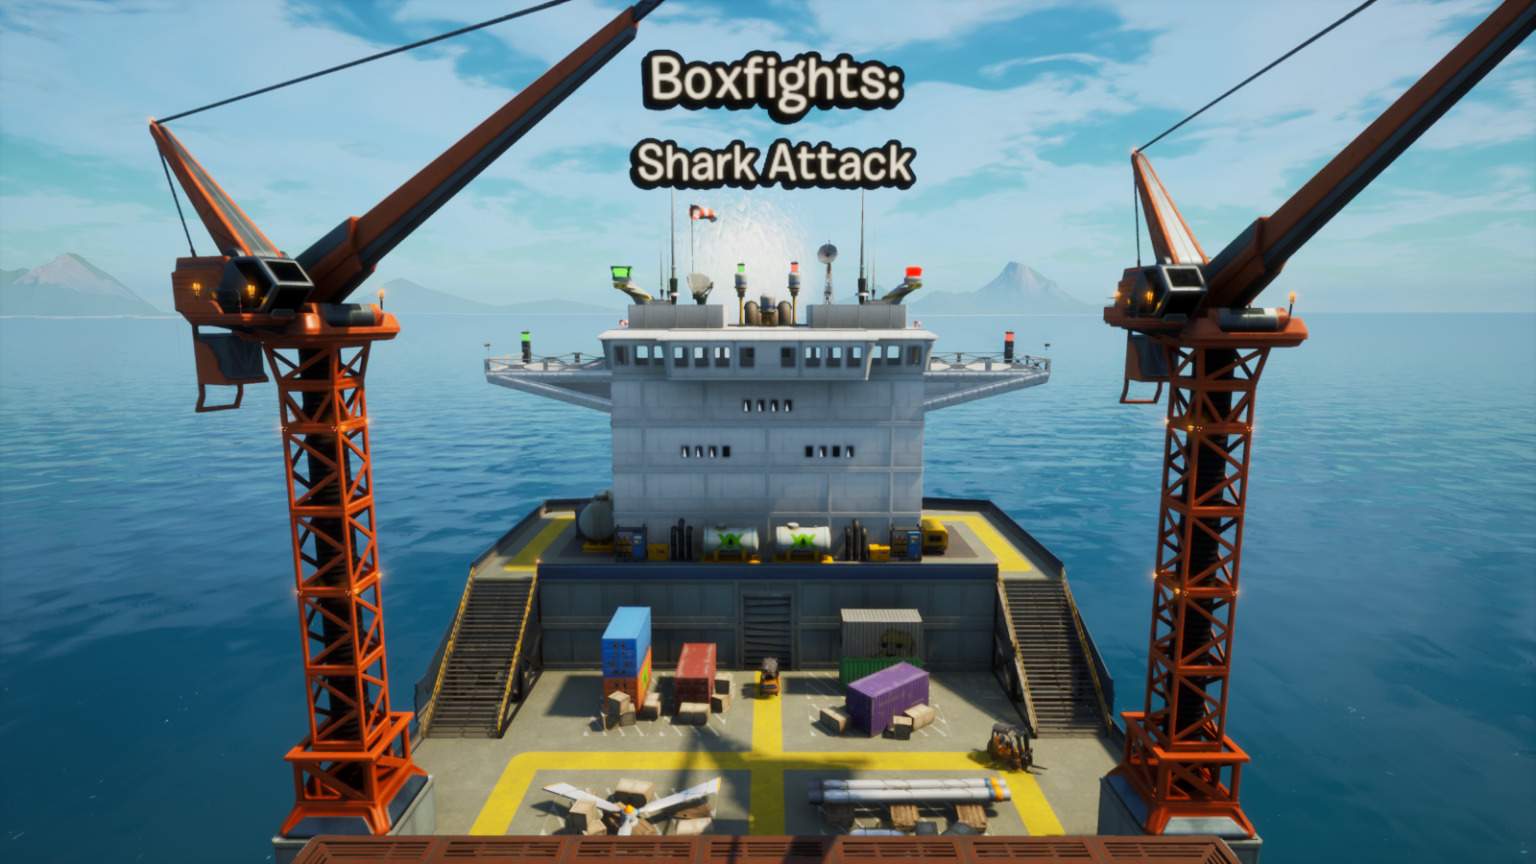 BOXFIGHTS: SHARK ATTACK